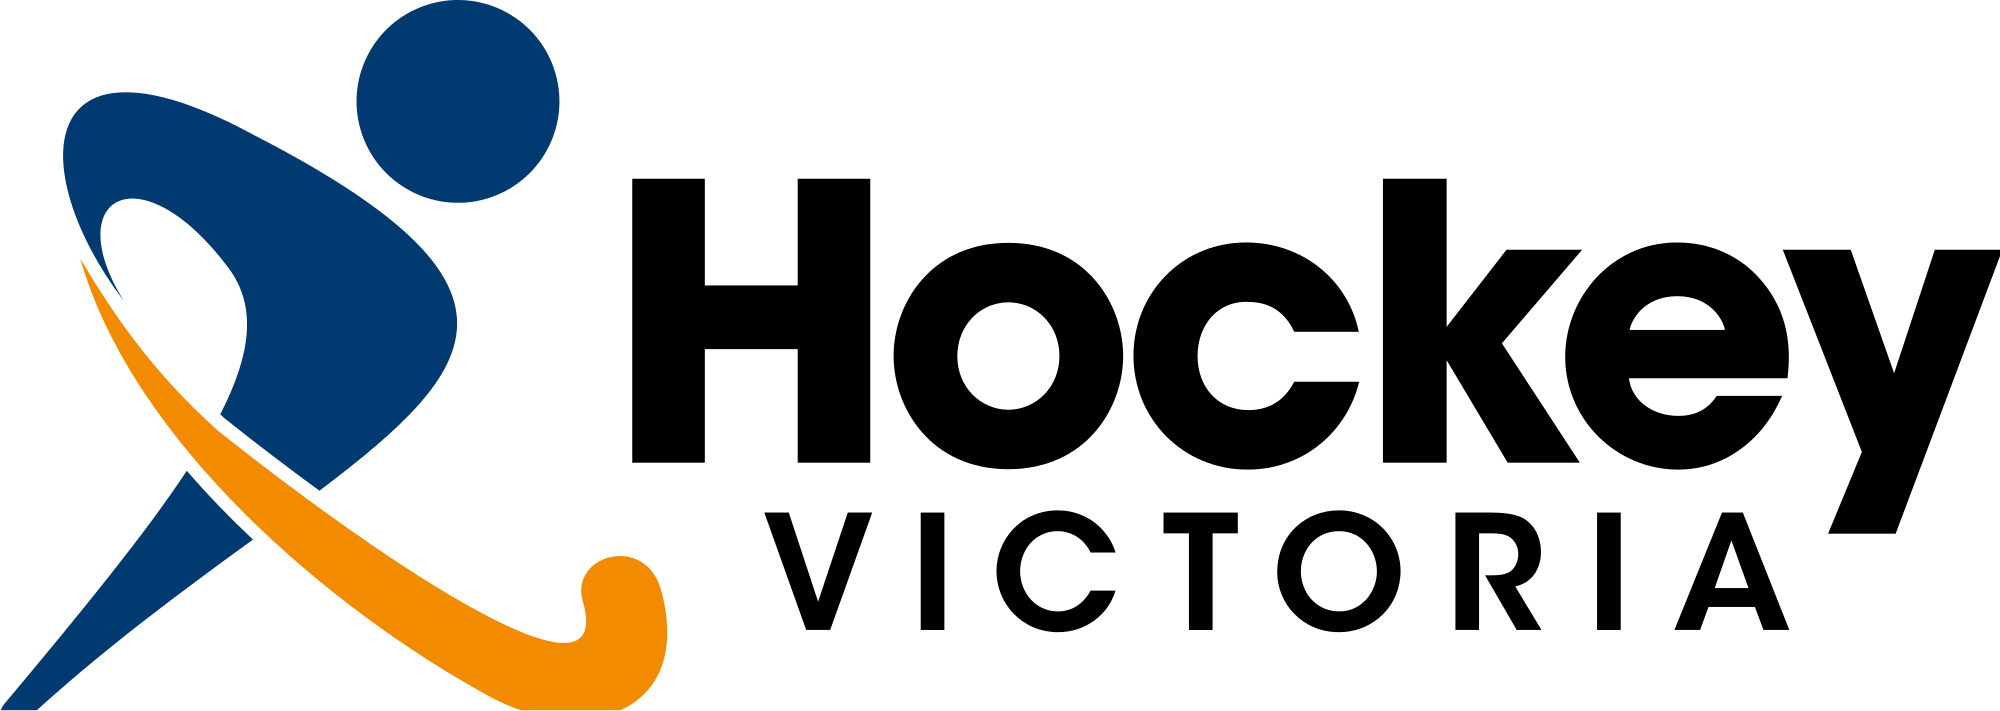 Field Hockey Victoria Logo SVG Clip arts